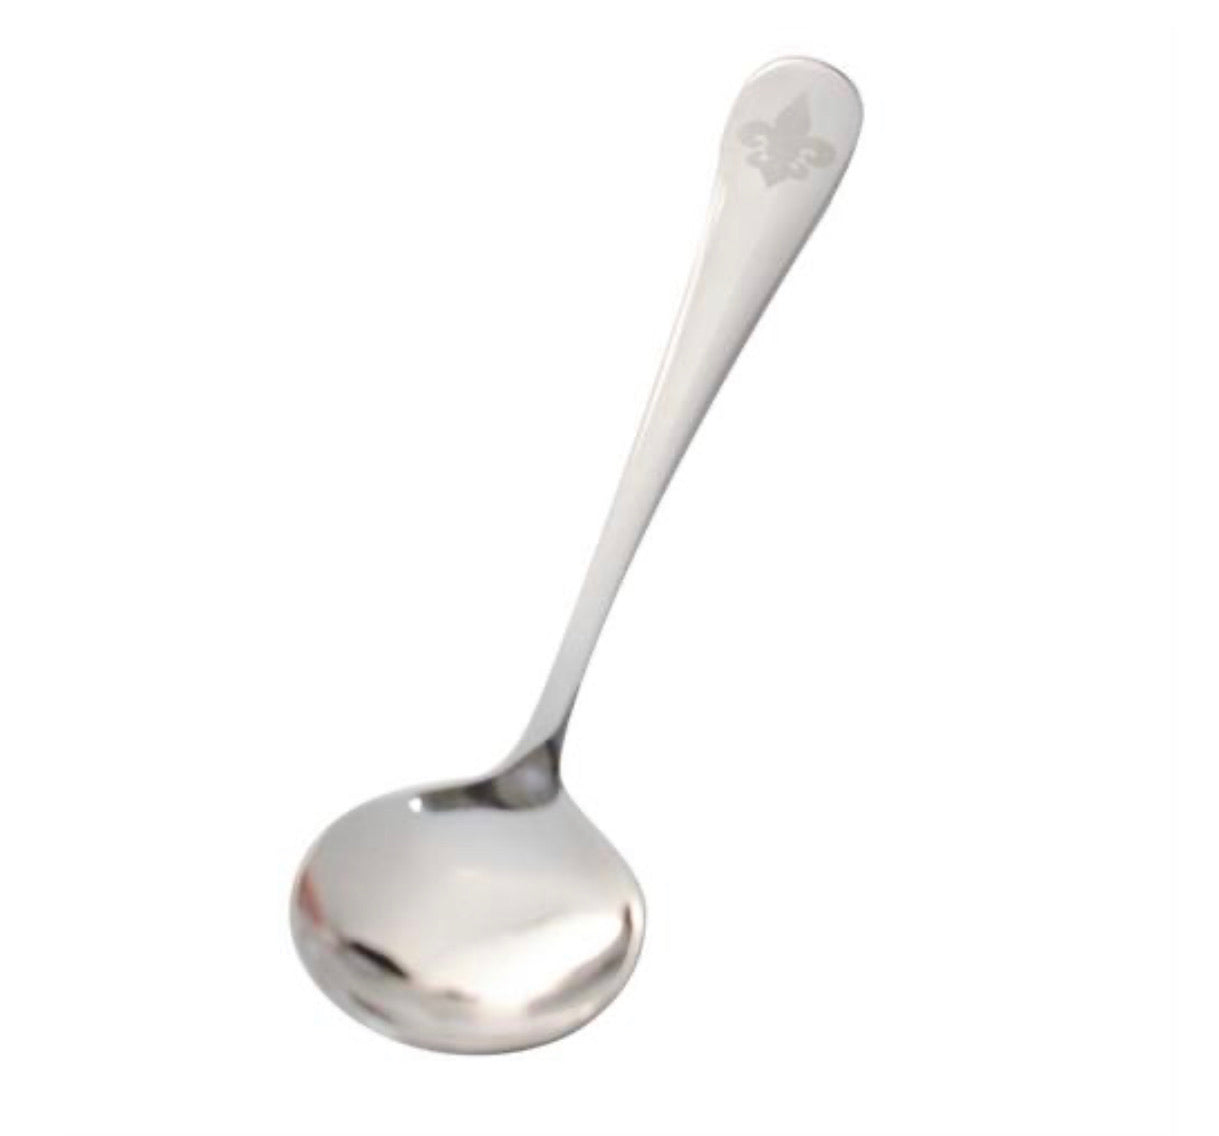 Orleans Gumbo Spoons